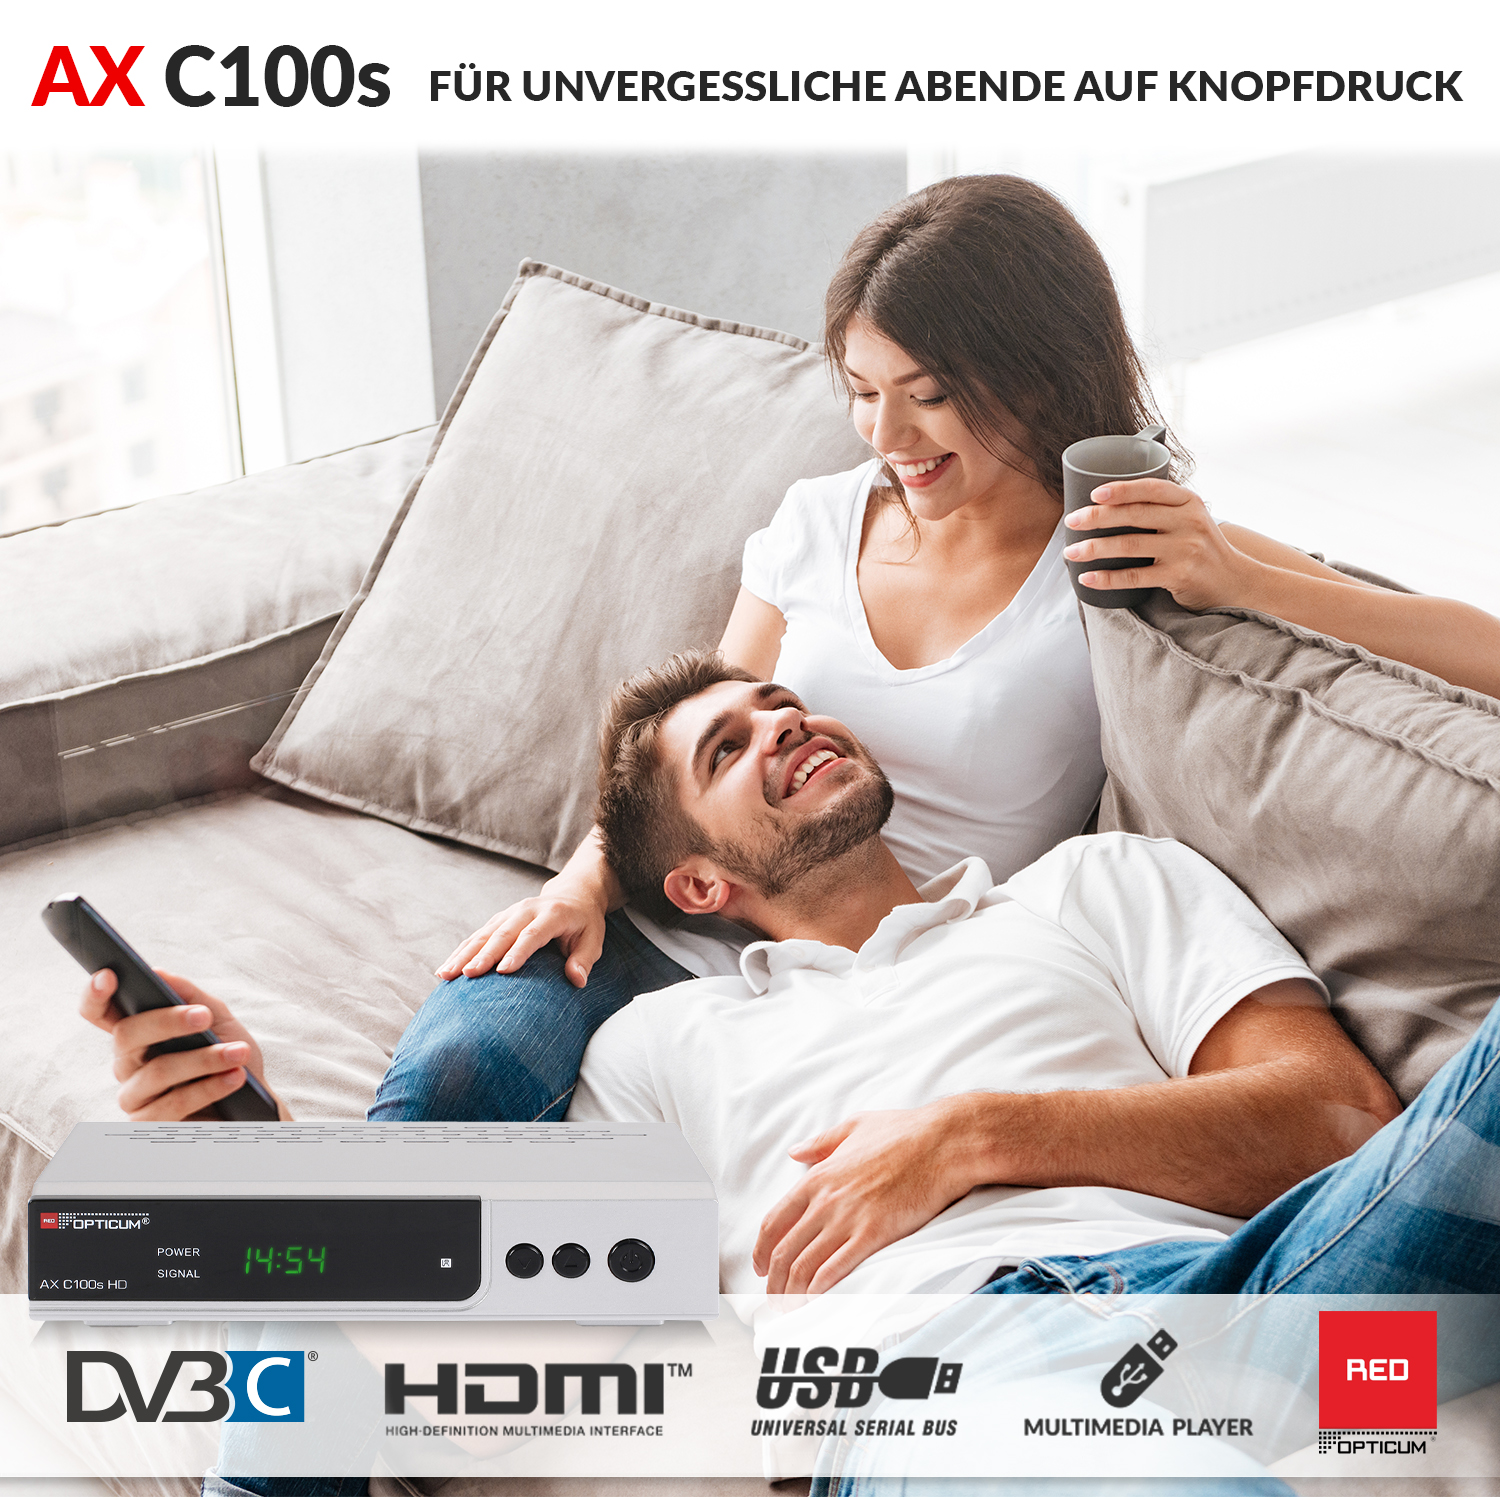 C100s Kabel-Receiver PVR-Aufnahmefunktion HD-EPG-HDMI-USB-SCART OPTICUM DVB-C2, Receiver RED Kabelreceiver I DVB-C, DVB-C mit AX Digitaler HD (HDTV, PVR-Funktion, silber)